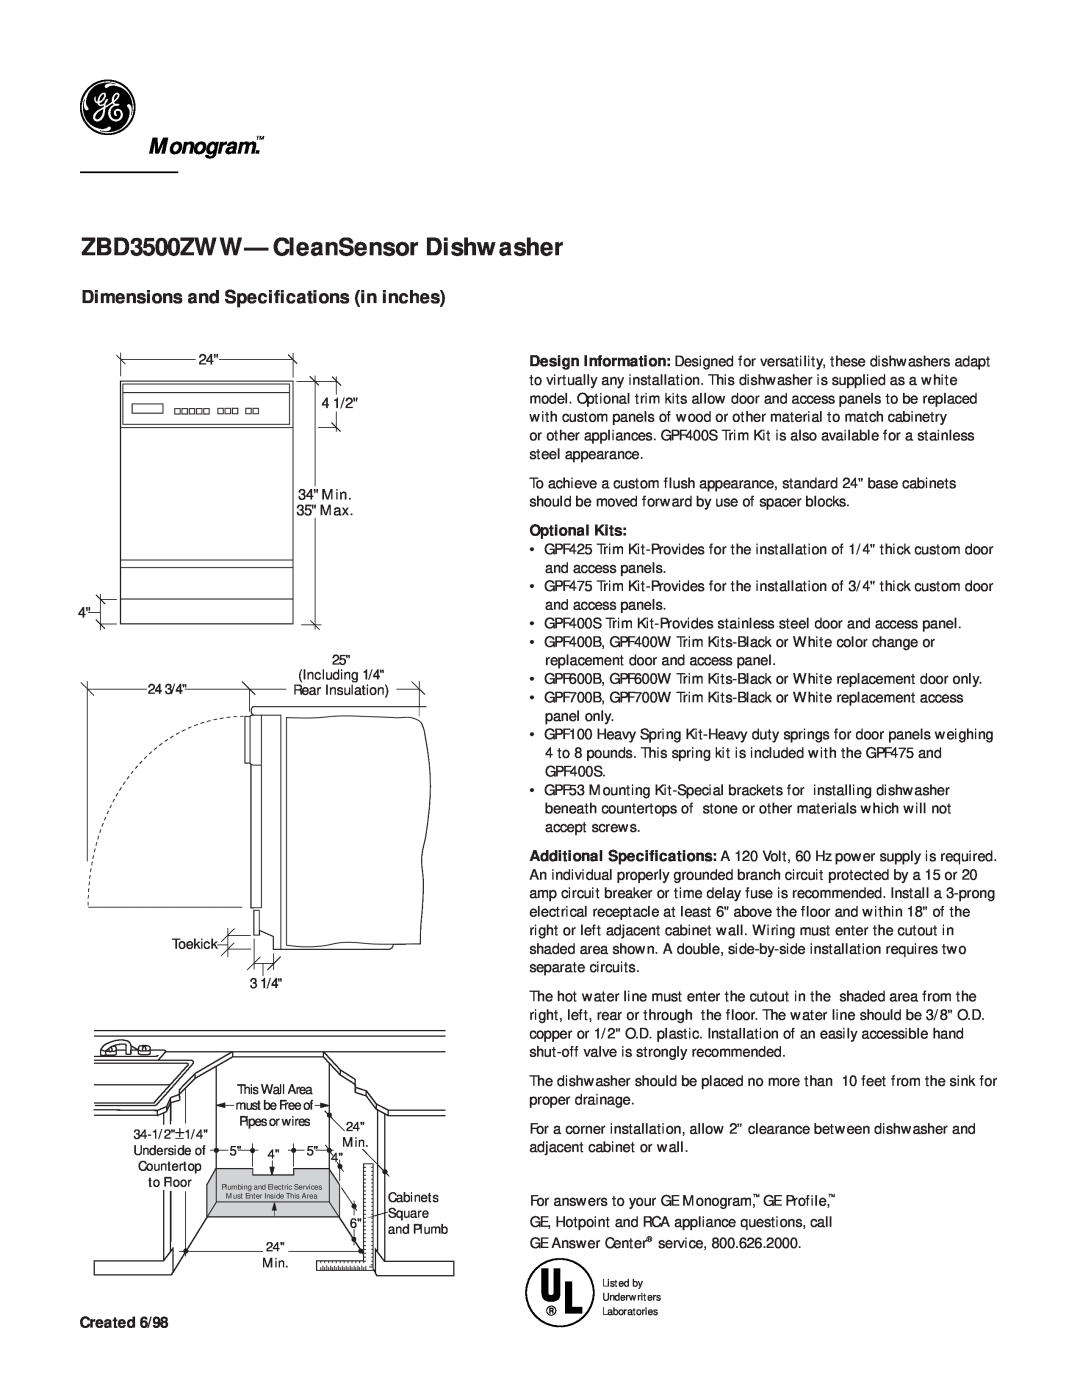 GE Monogram dimensions ZBD3500ZWW-CleanSensorDishwasher, Monogram, Dimensions and Specifications in inches 